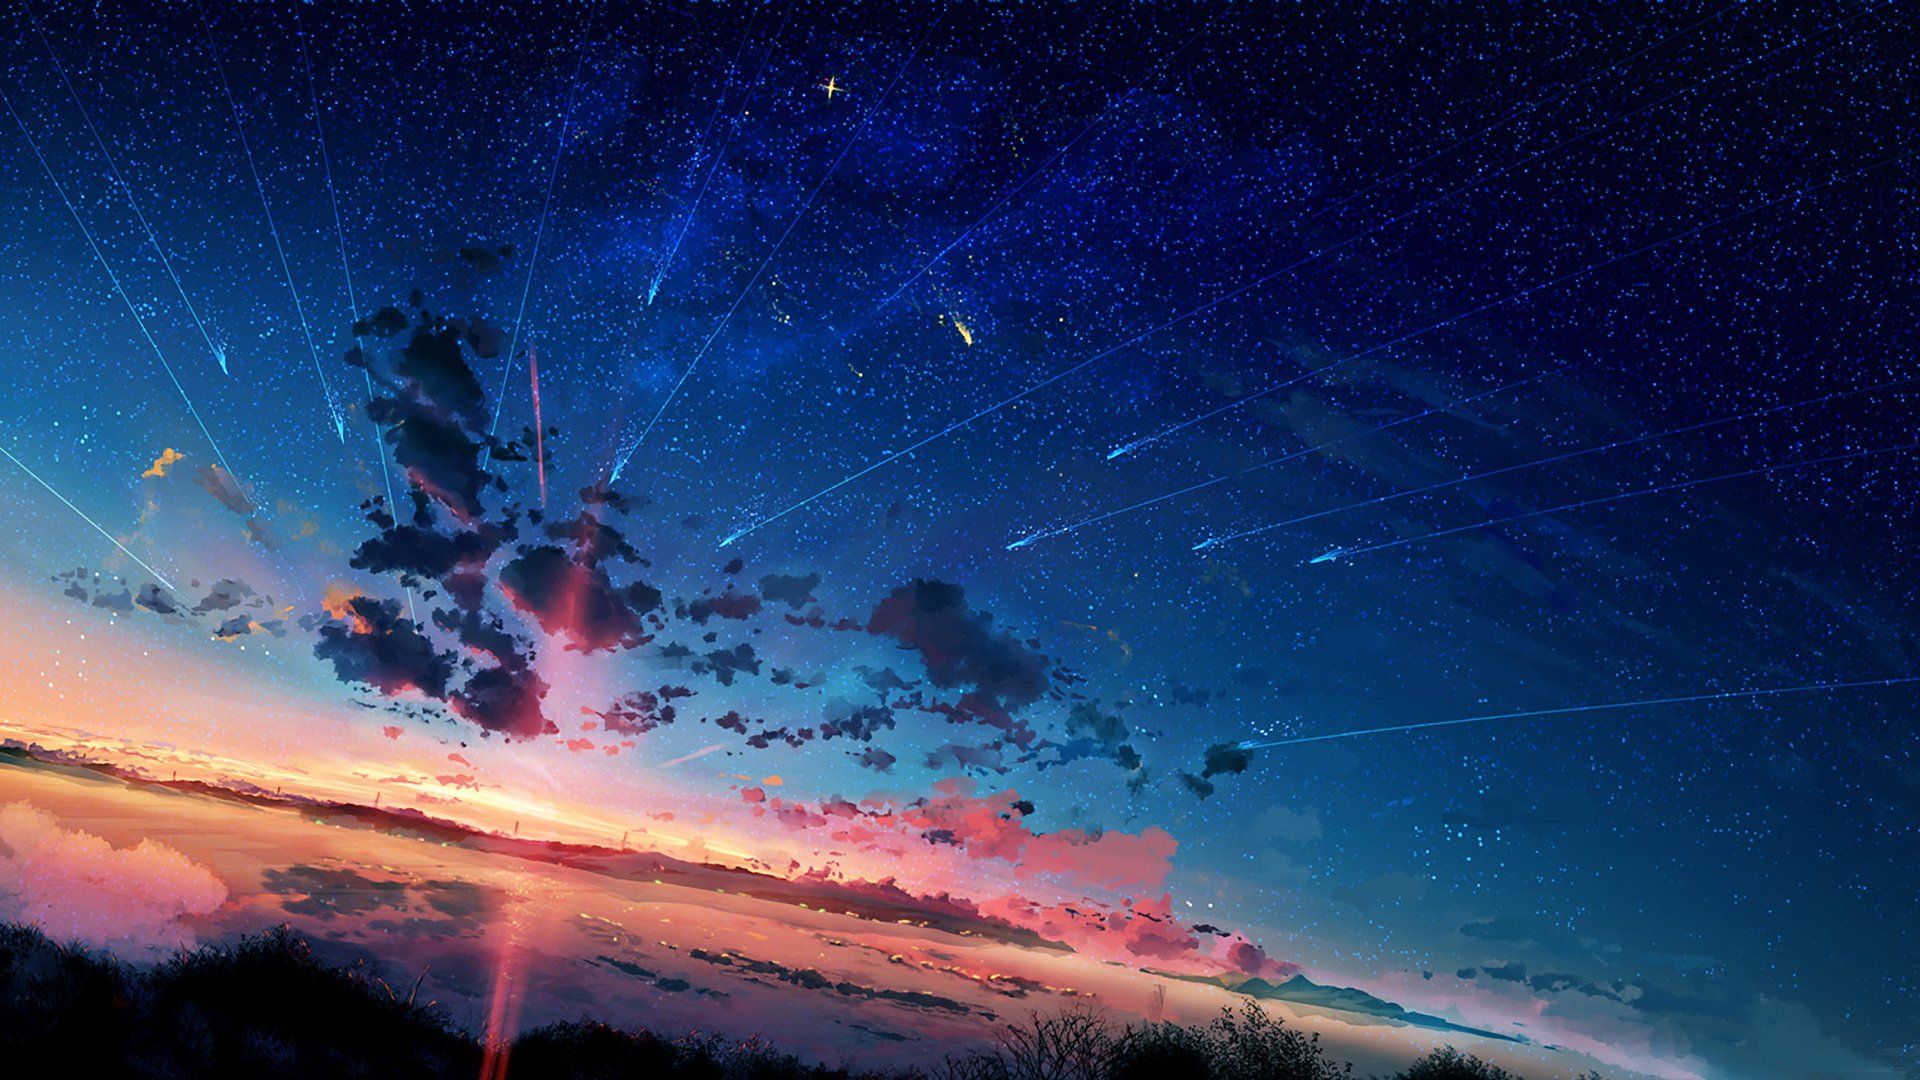 Night Sky Anime Wallpaperの写真素材画像素材 Image 206808508